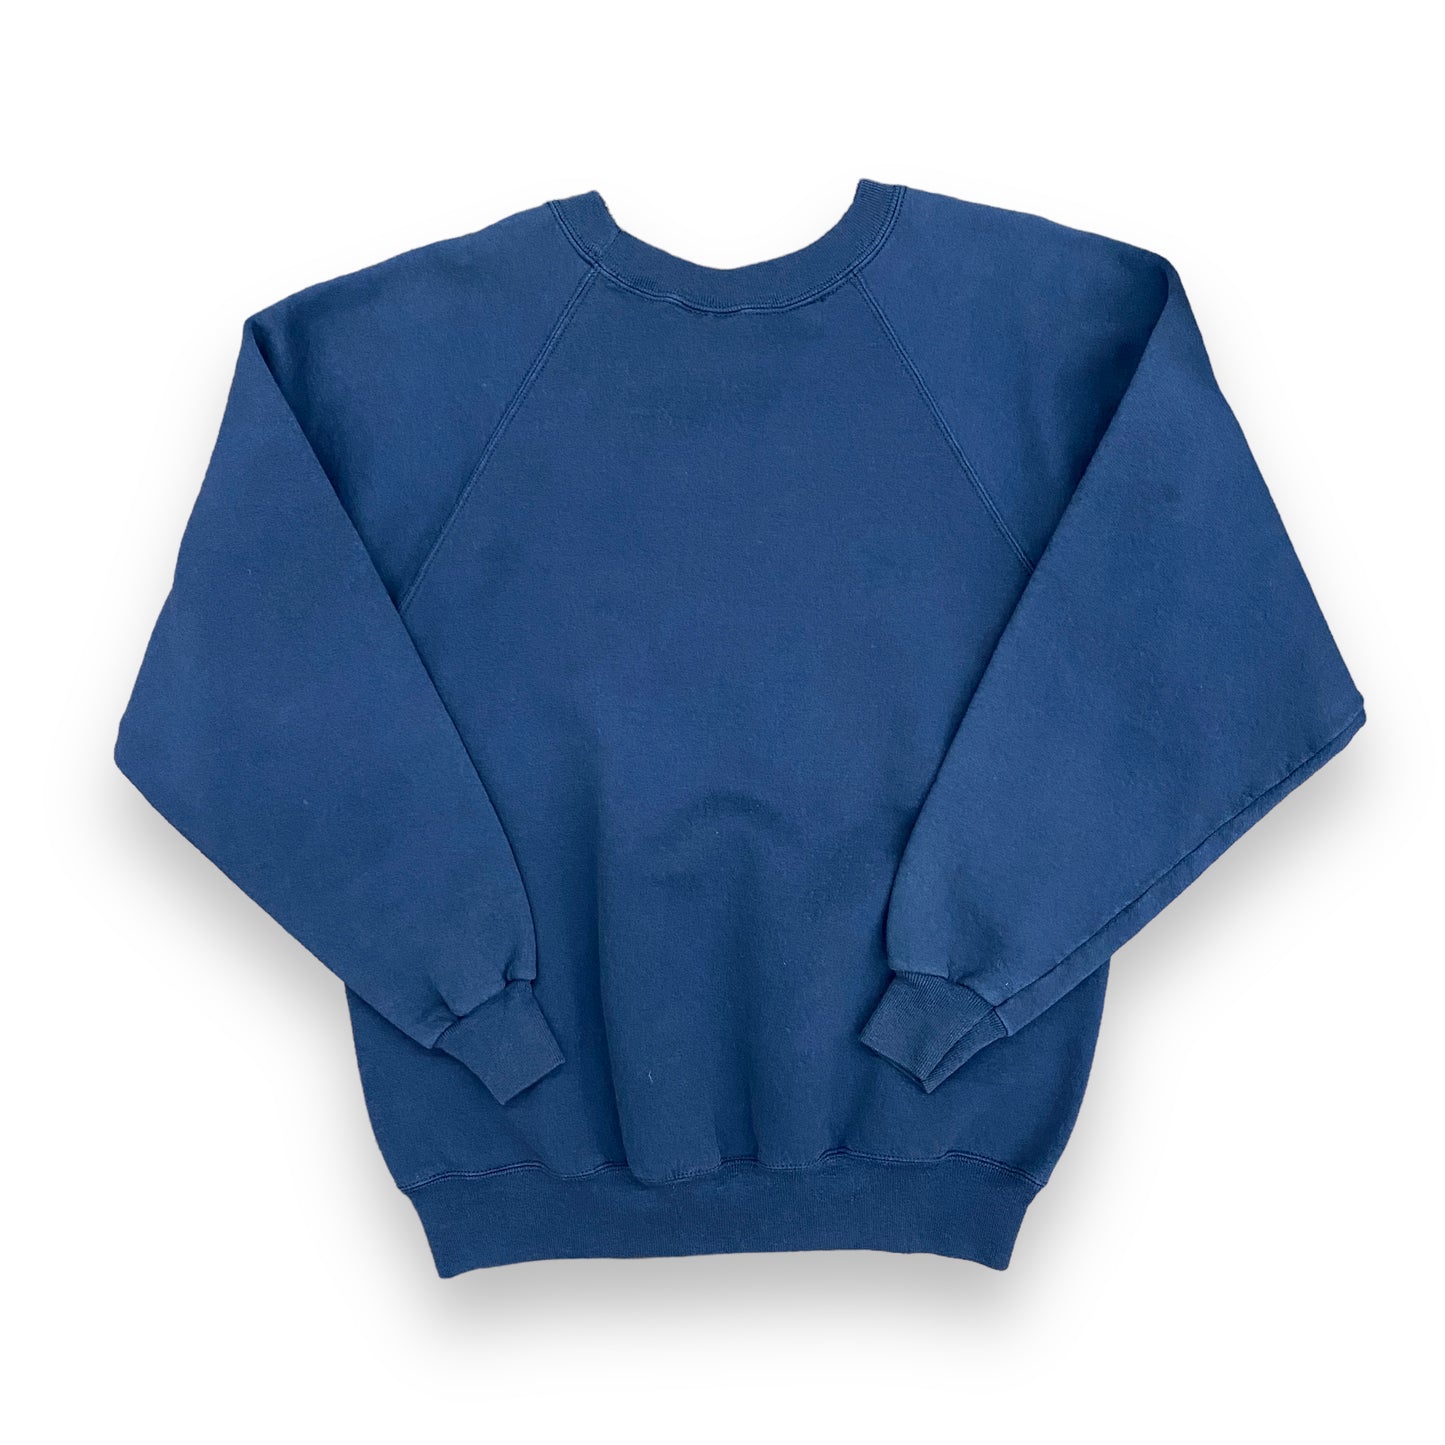 1990s Hanes Navy Blue Raglan Blank Sweatshirt - Size Medium